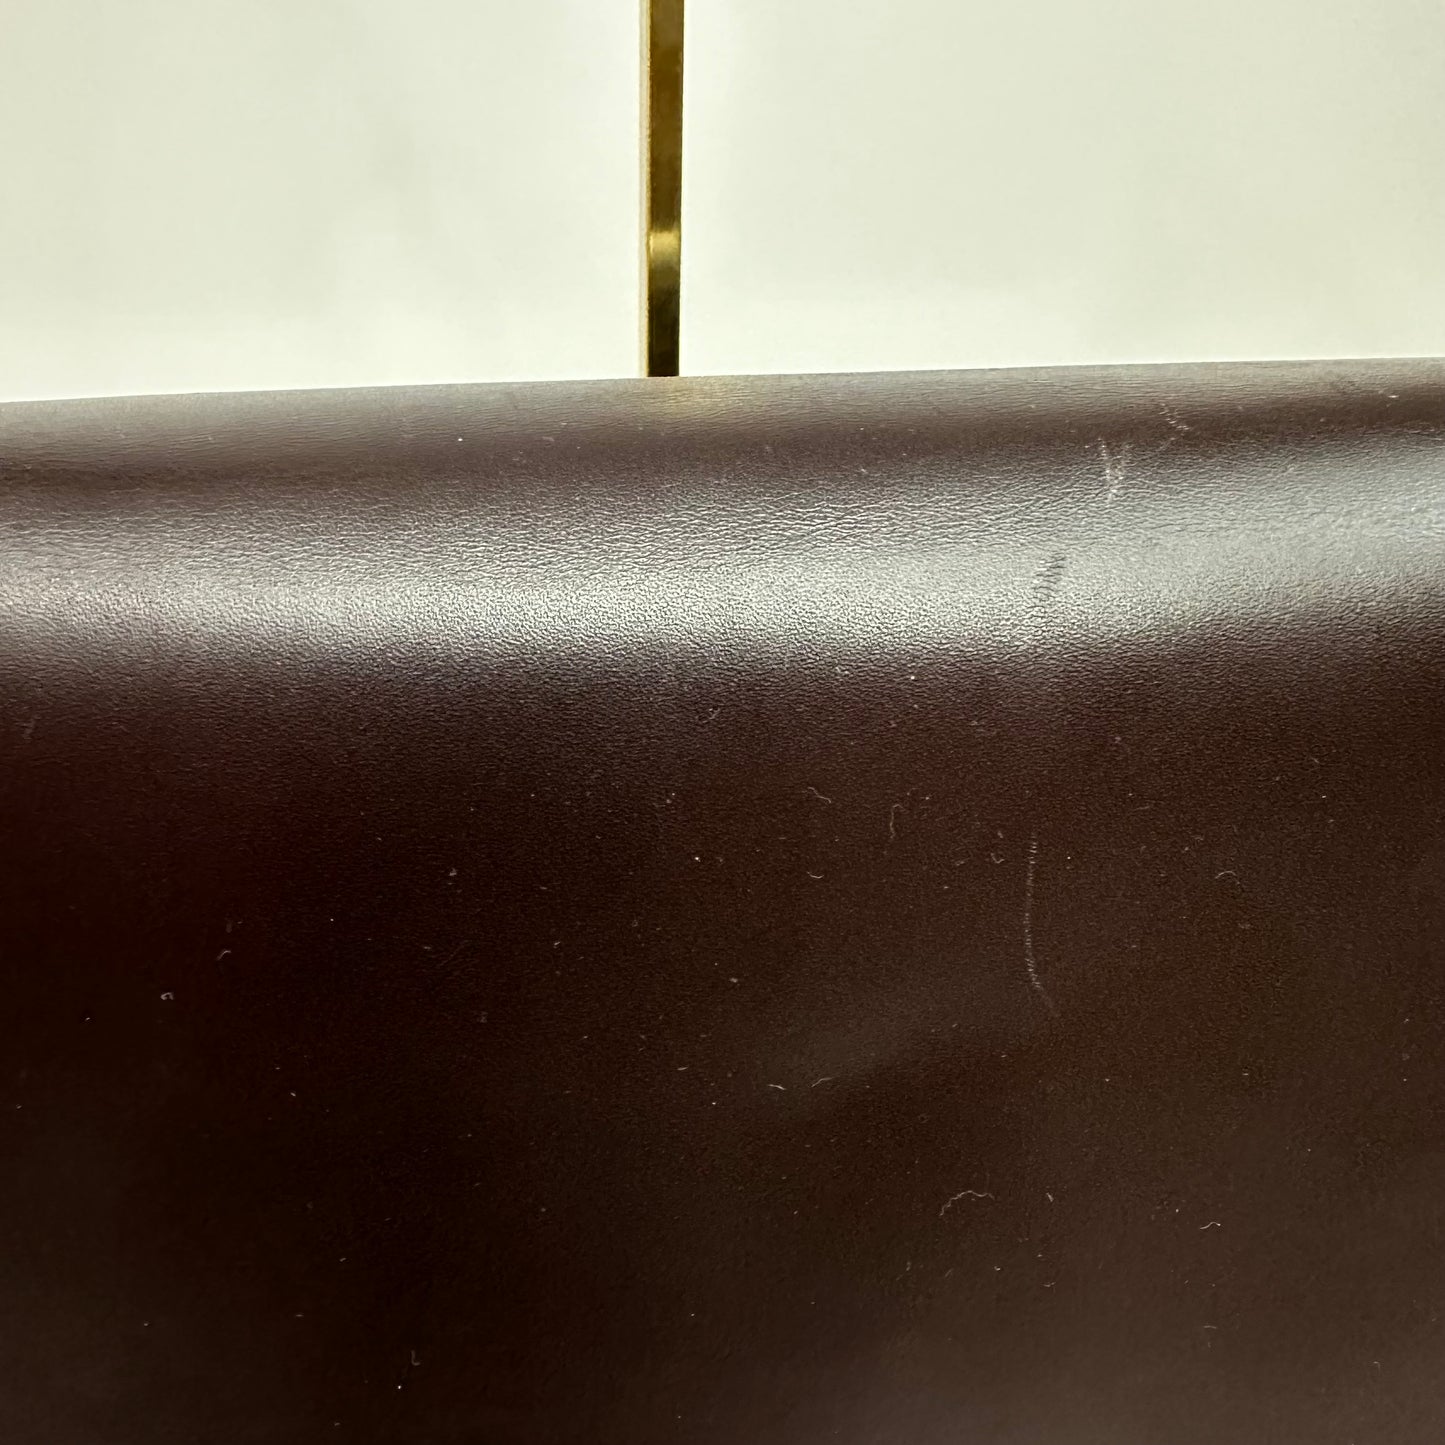 Vintage Gucci Brown Leather Baguette Bag